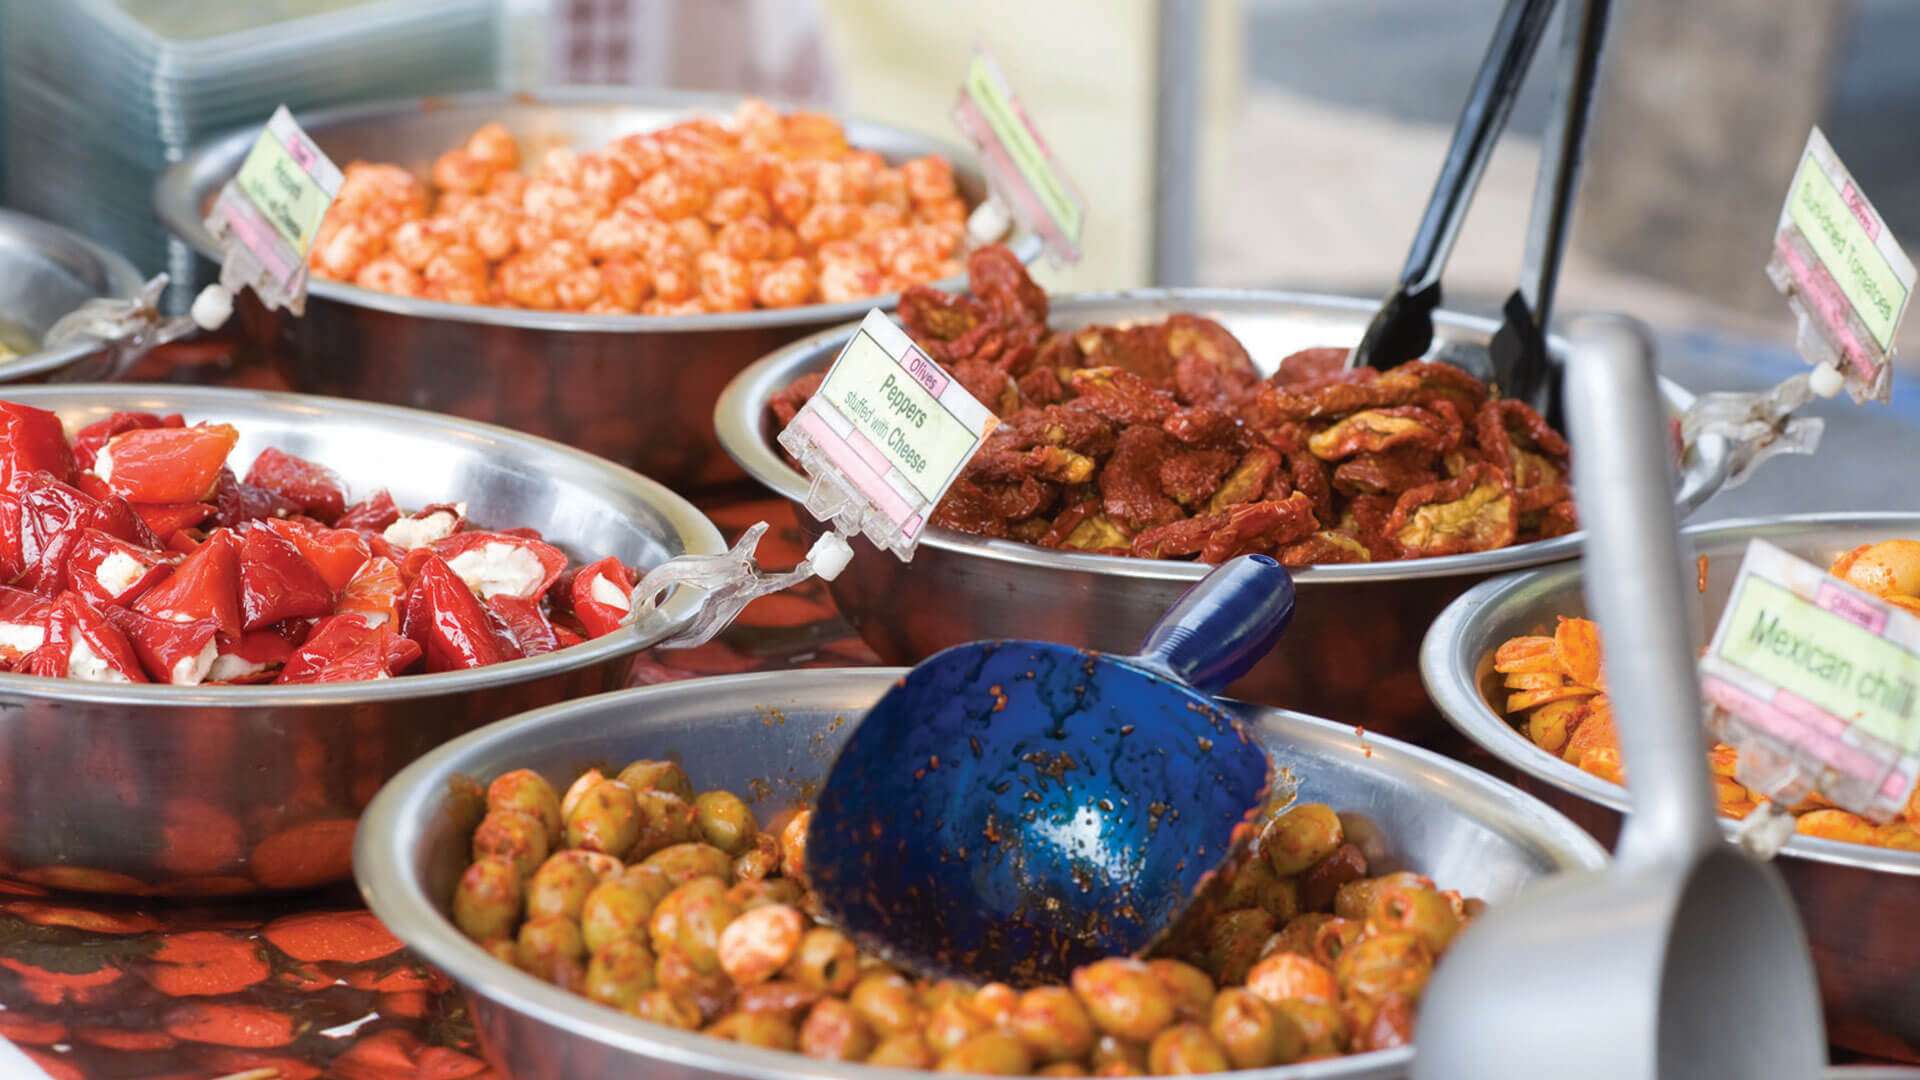 National Street Food Festival 2022 Delhi Dates, History, Major